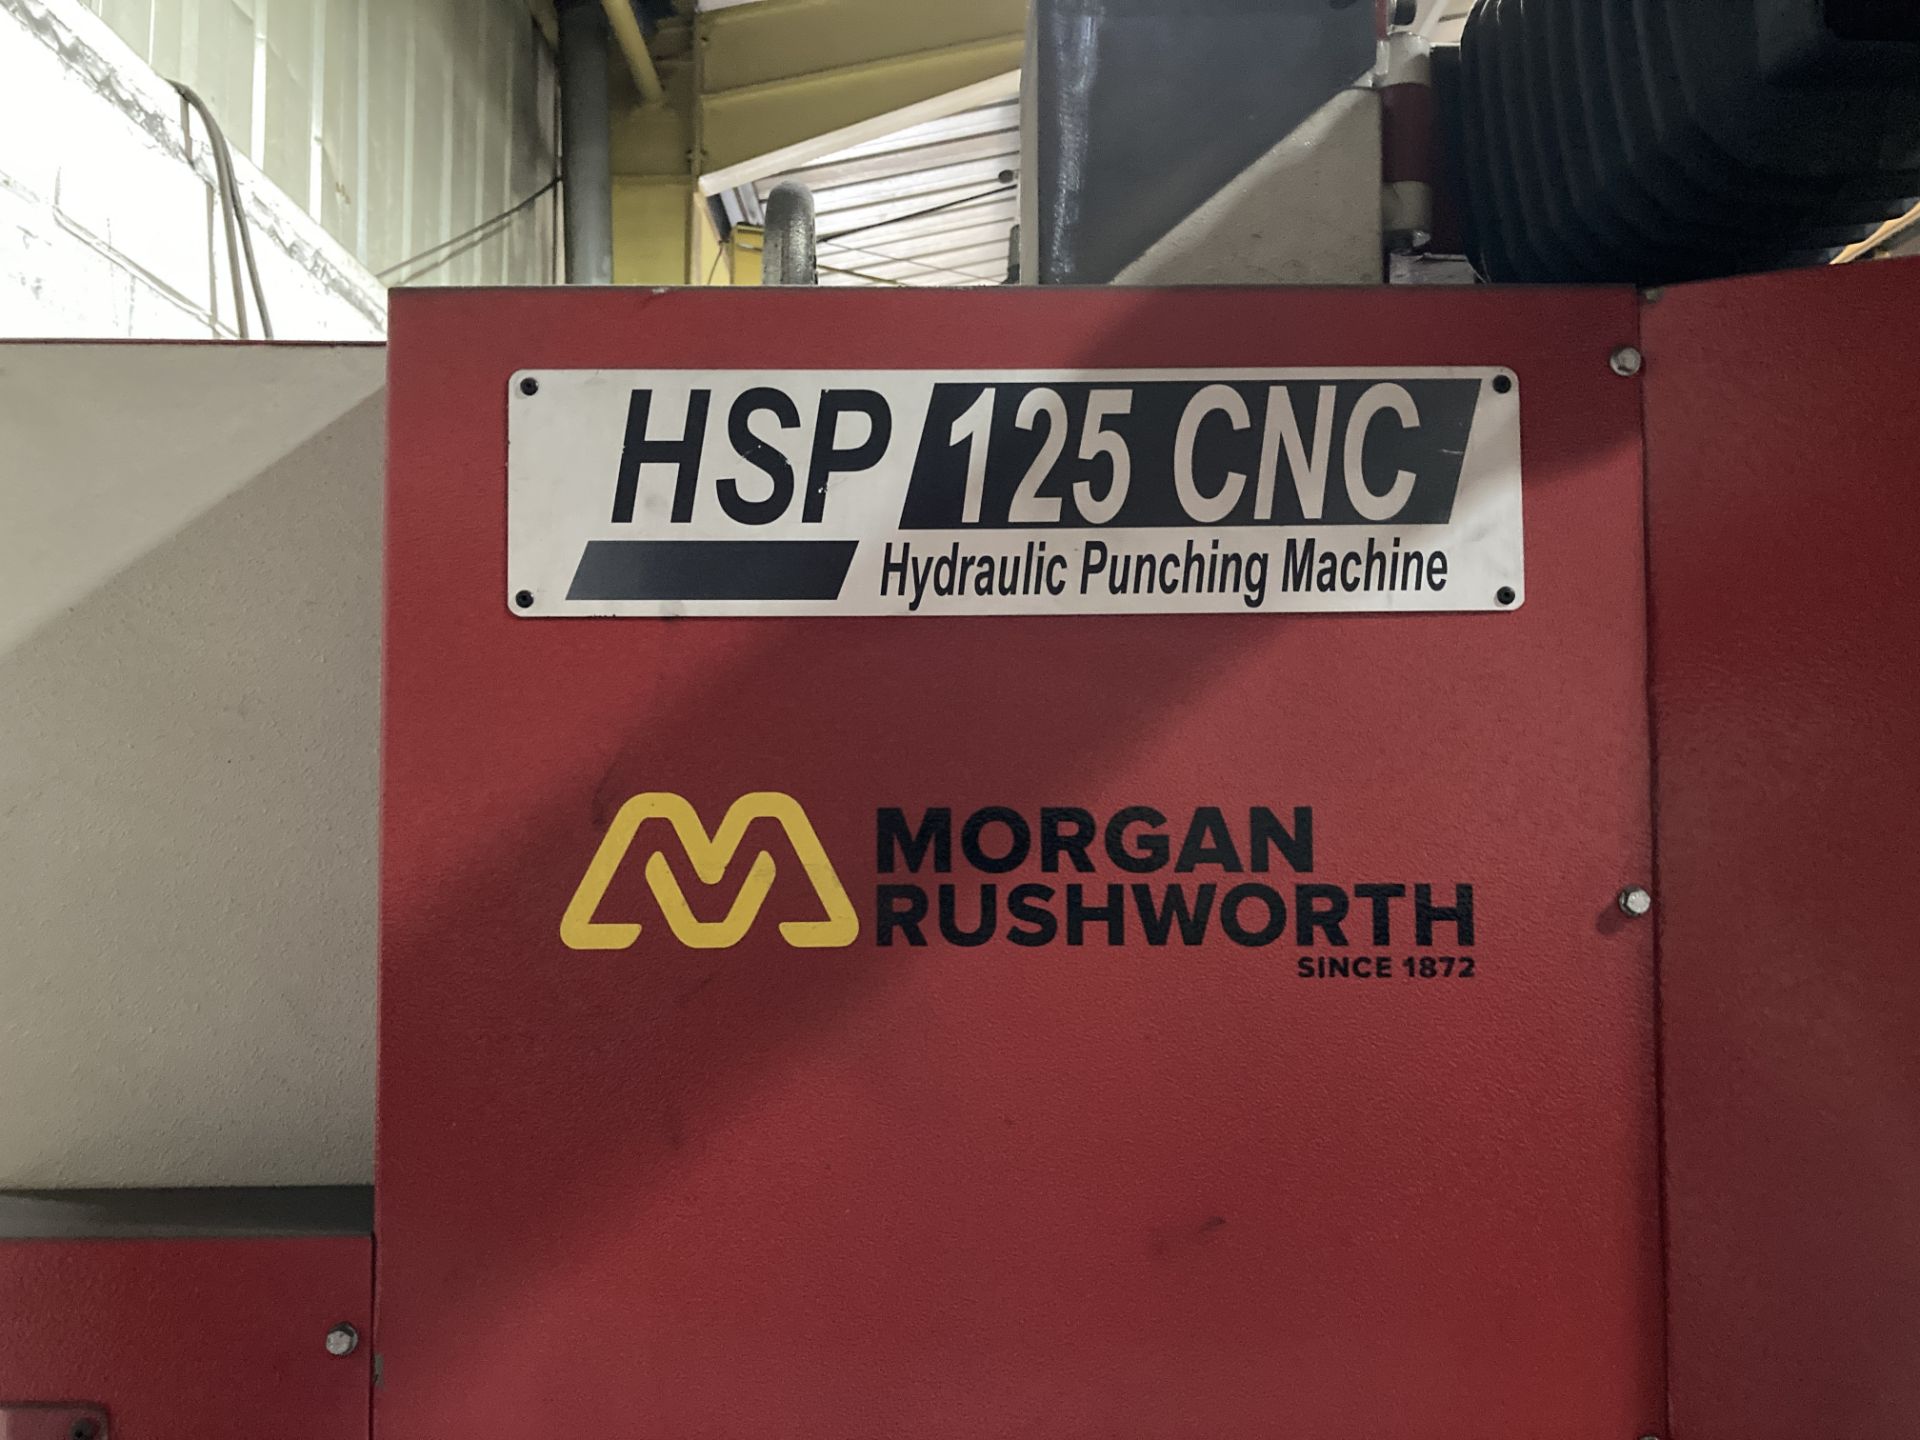 Morgan Rushworth HSP 125 CNC triple head hydraulic punching machine, year 2016, serial no. S155415 - Image 12 of 12